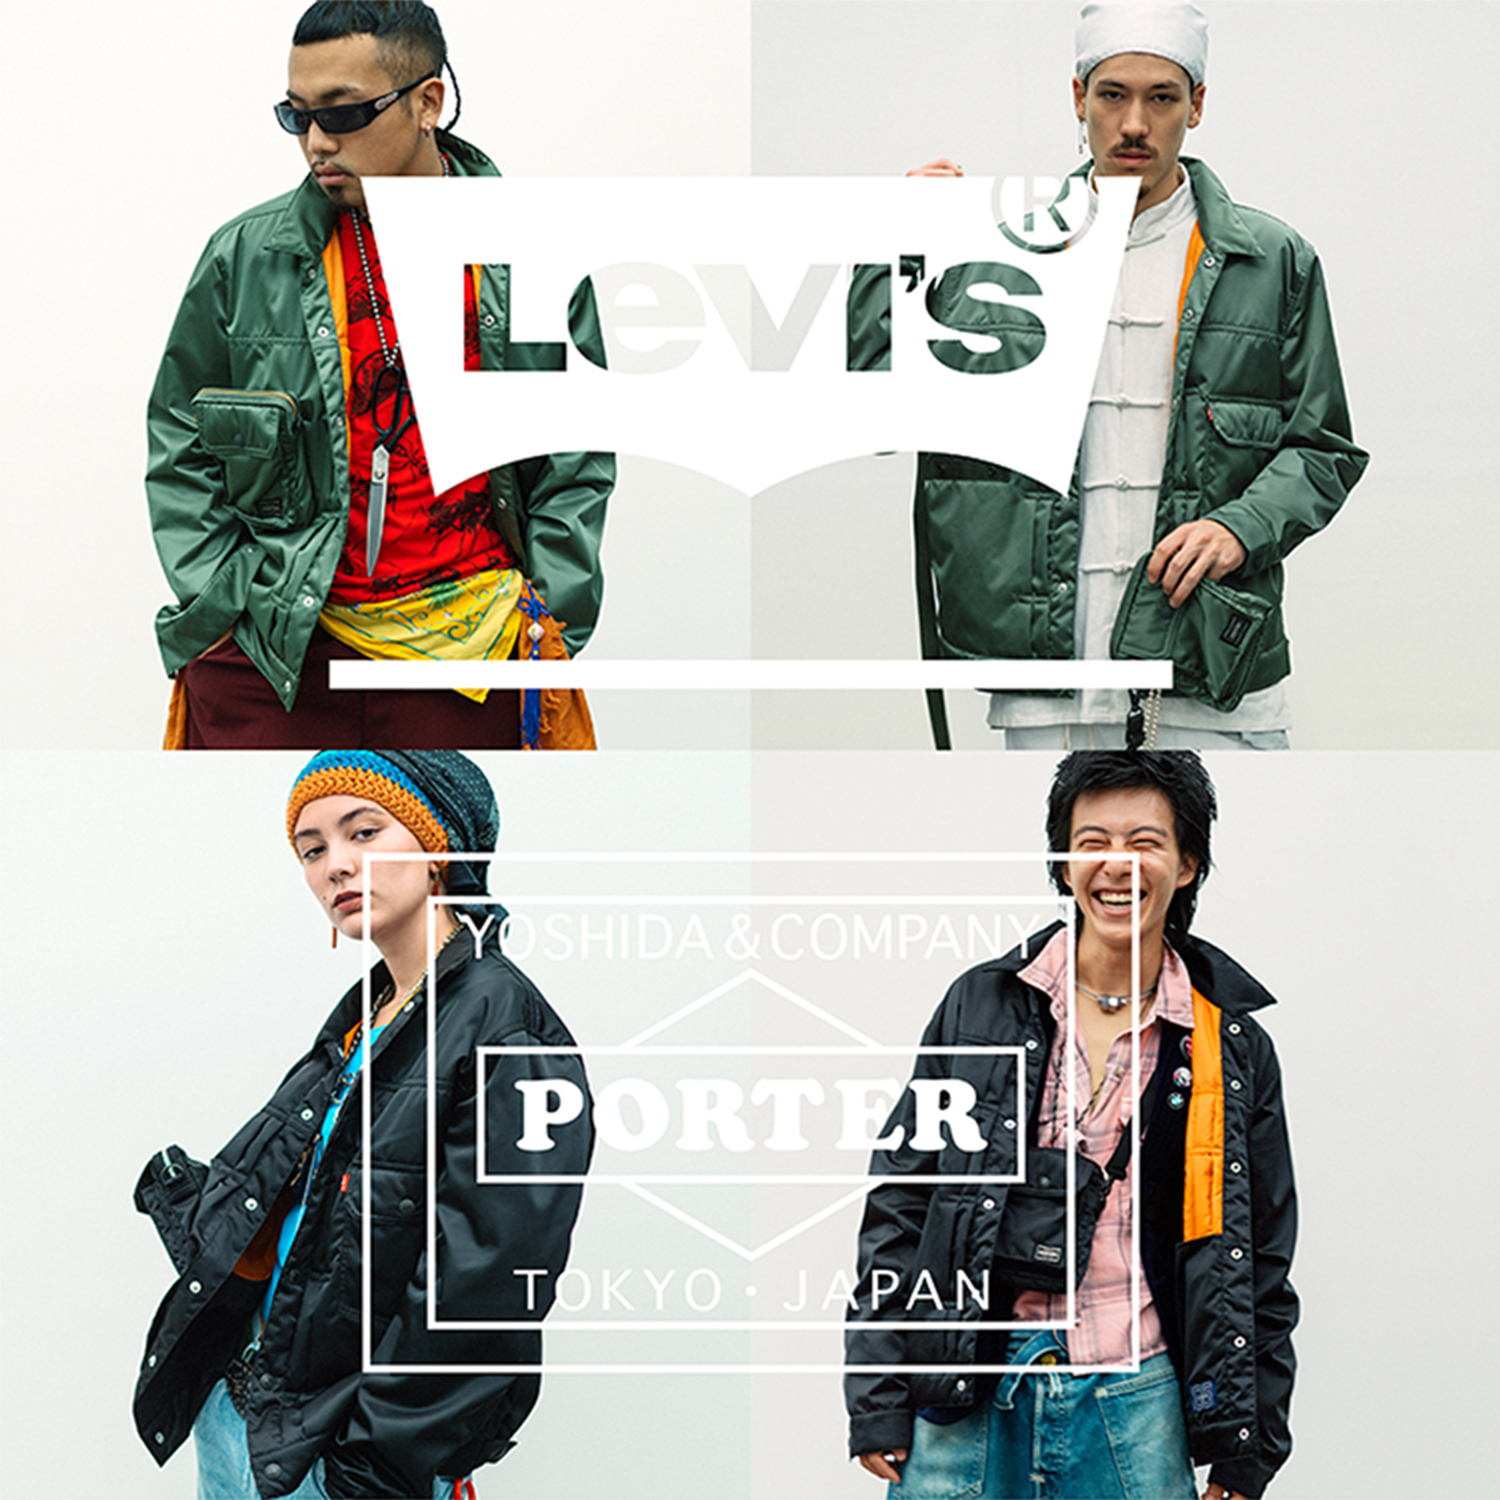 LEVIS | YOSHIDA & COMPANY PORTER TOKYO・JAPAN